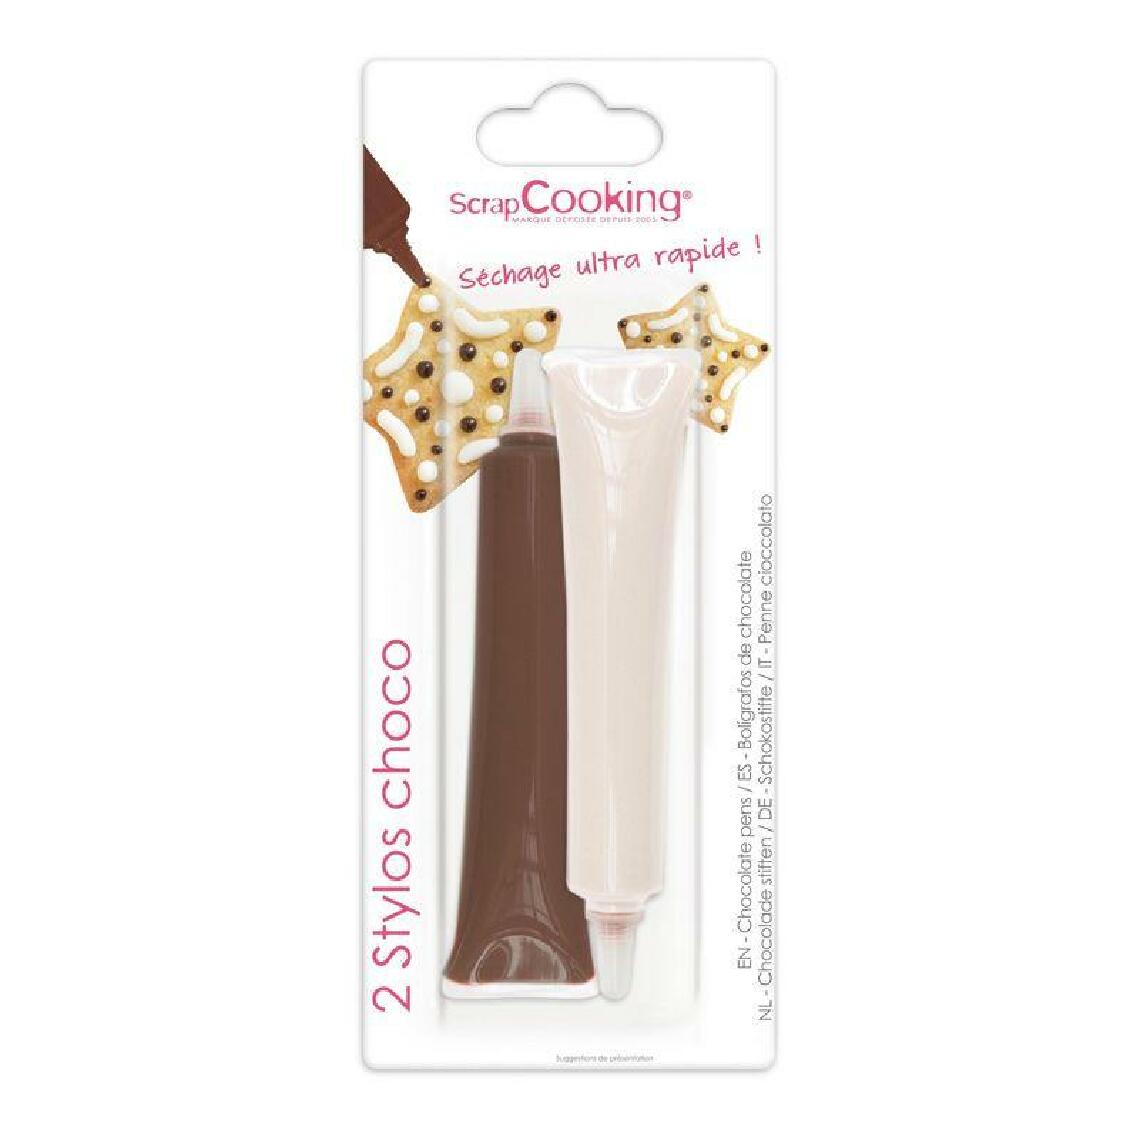 Scrapcooking - 2 stylos chocolat - Marron et blanc - 2 x 25 g - Kits créatifs